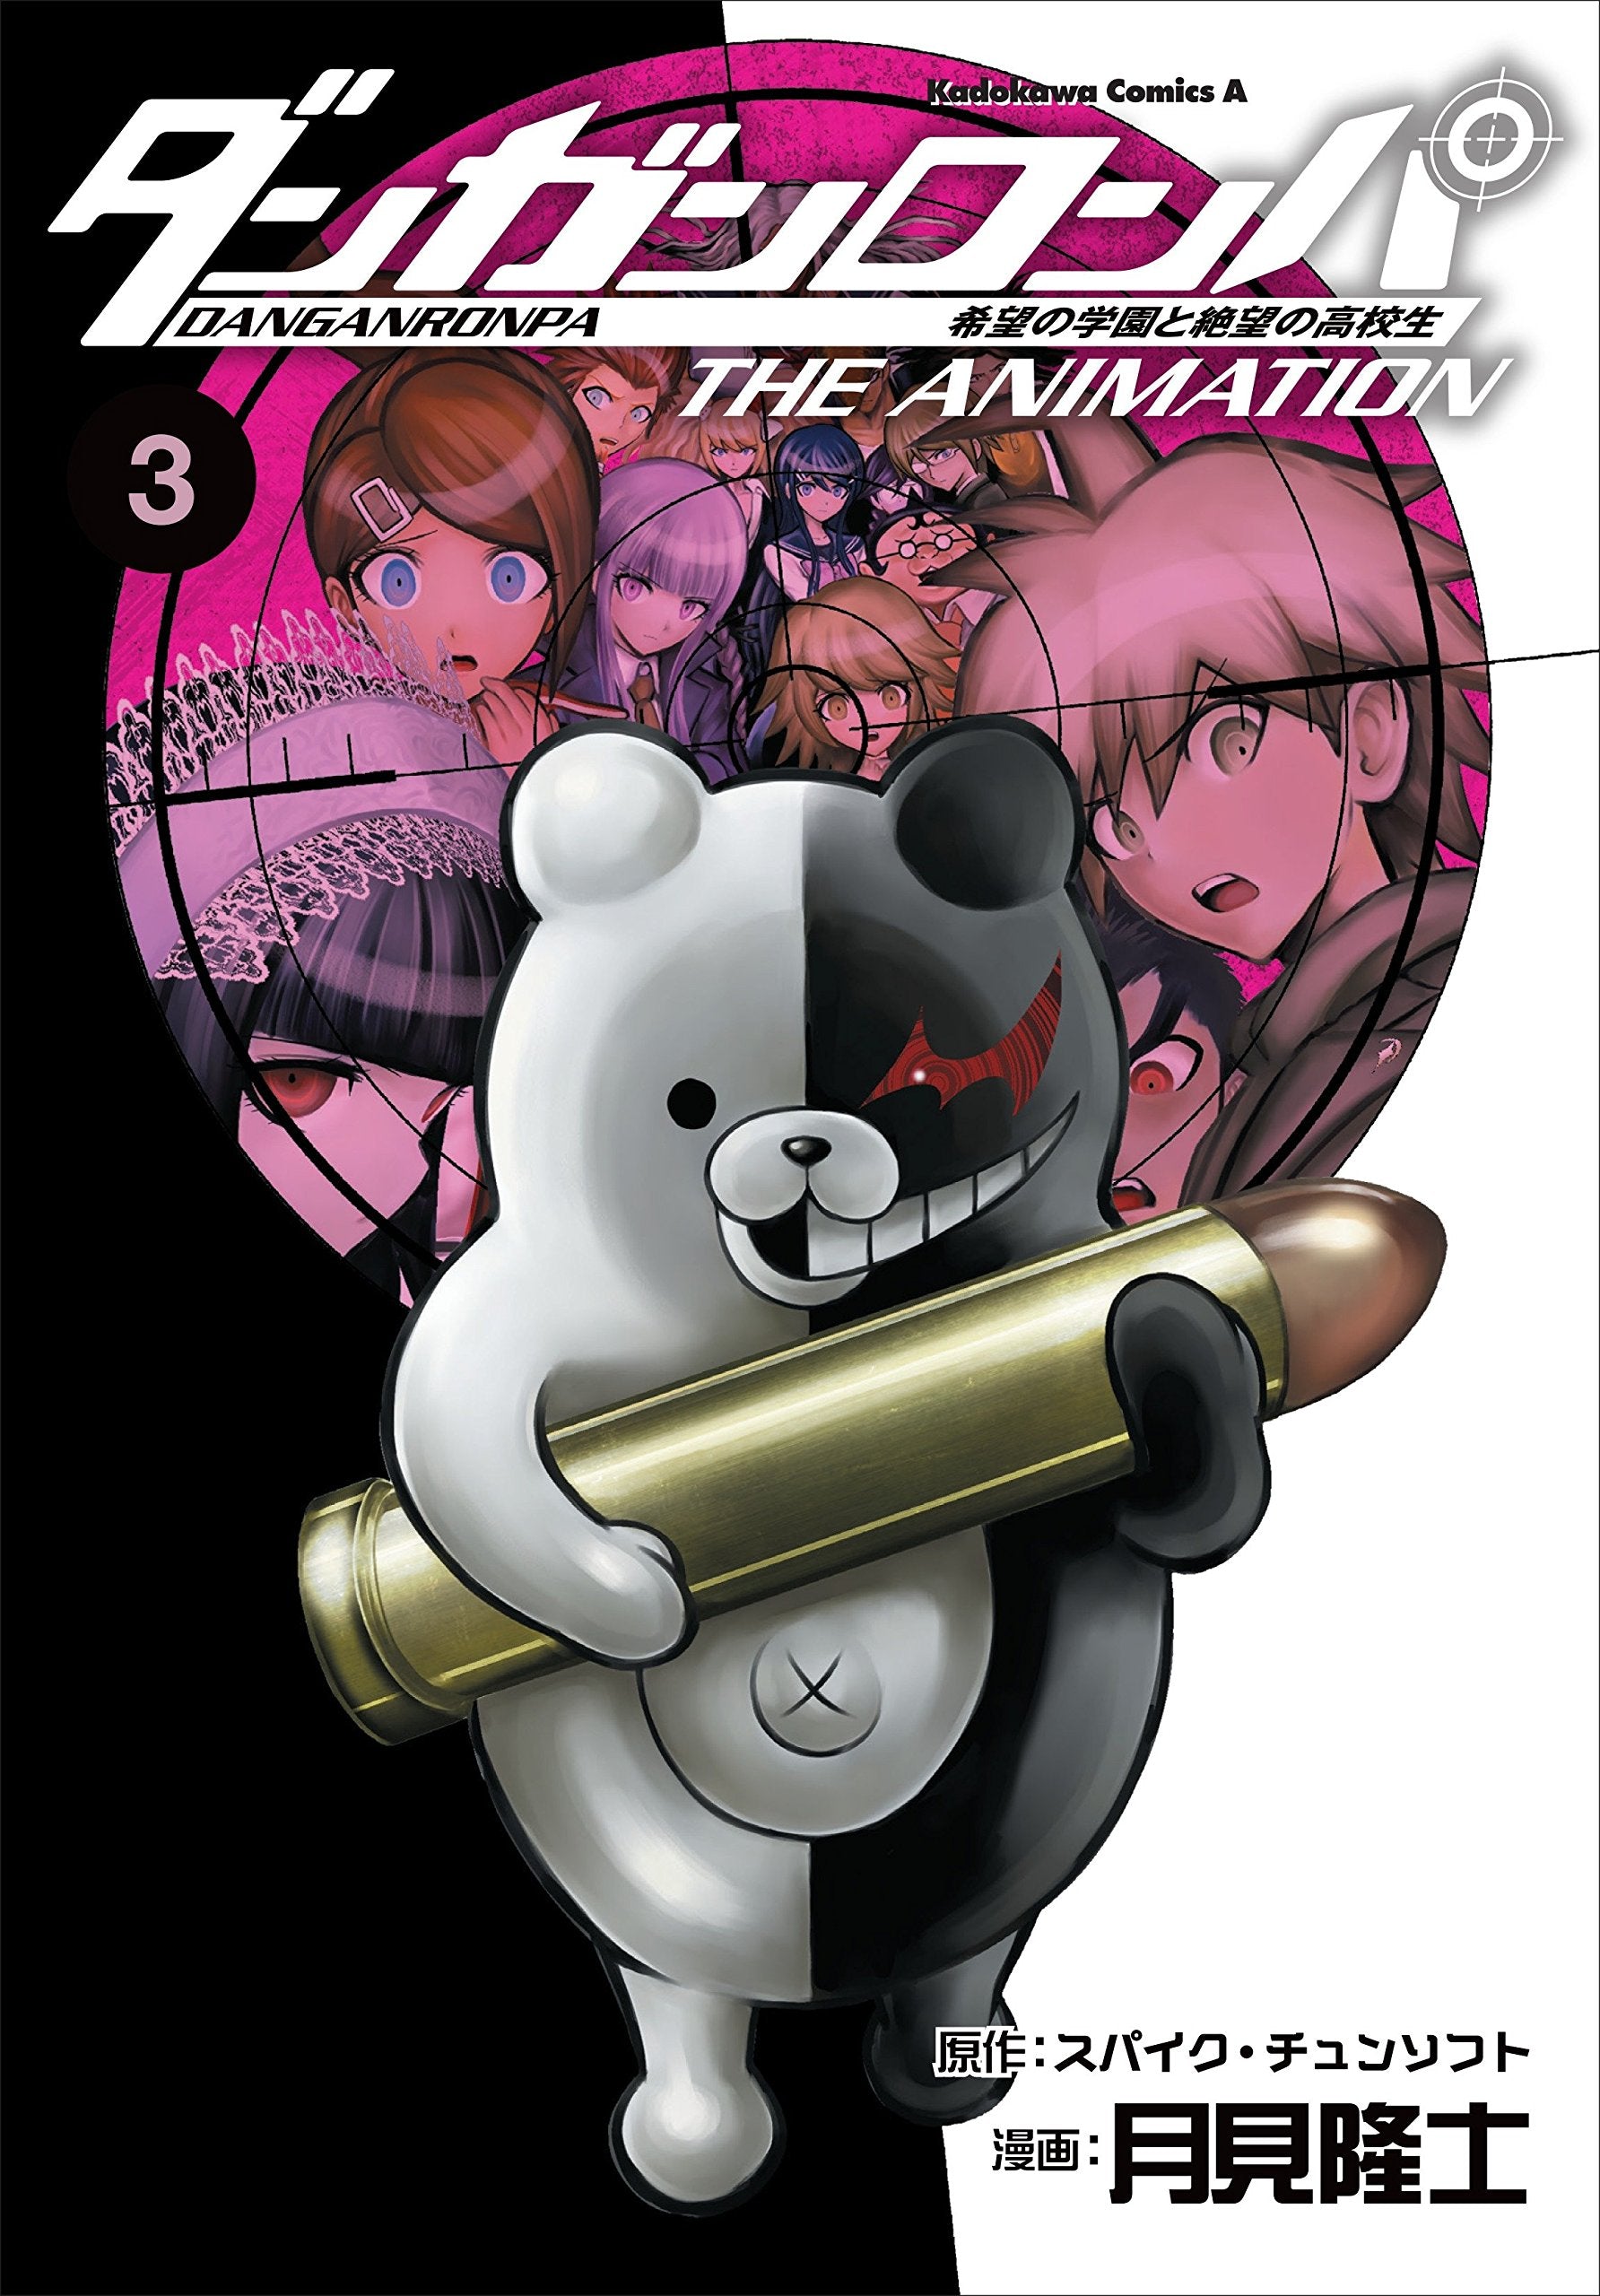 Danganronpa: The Animation Volume 3